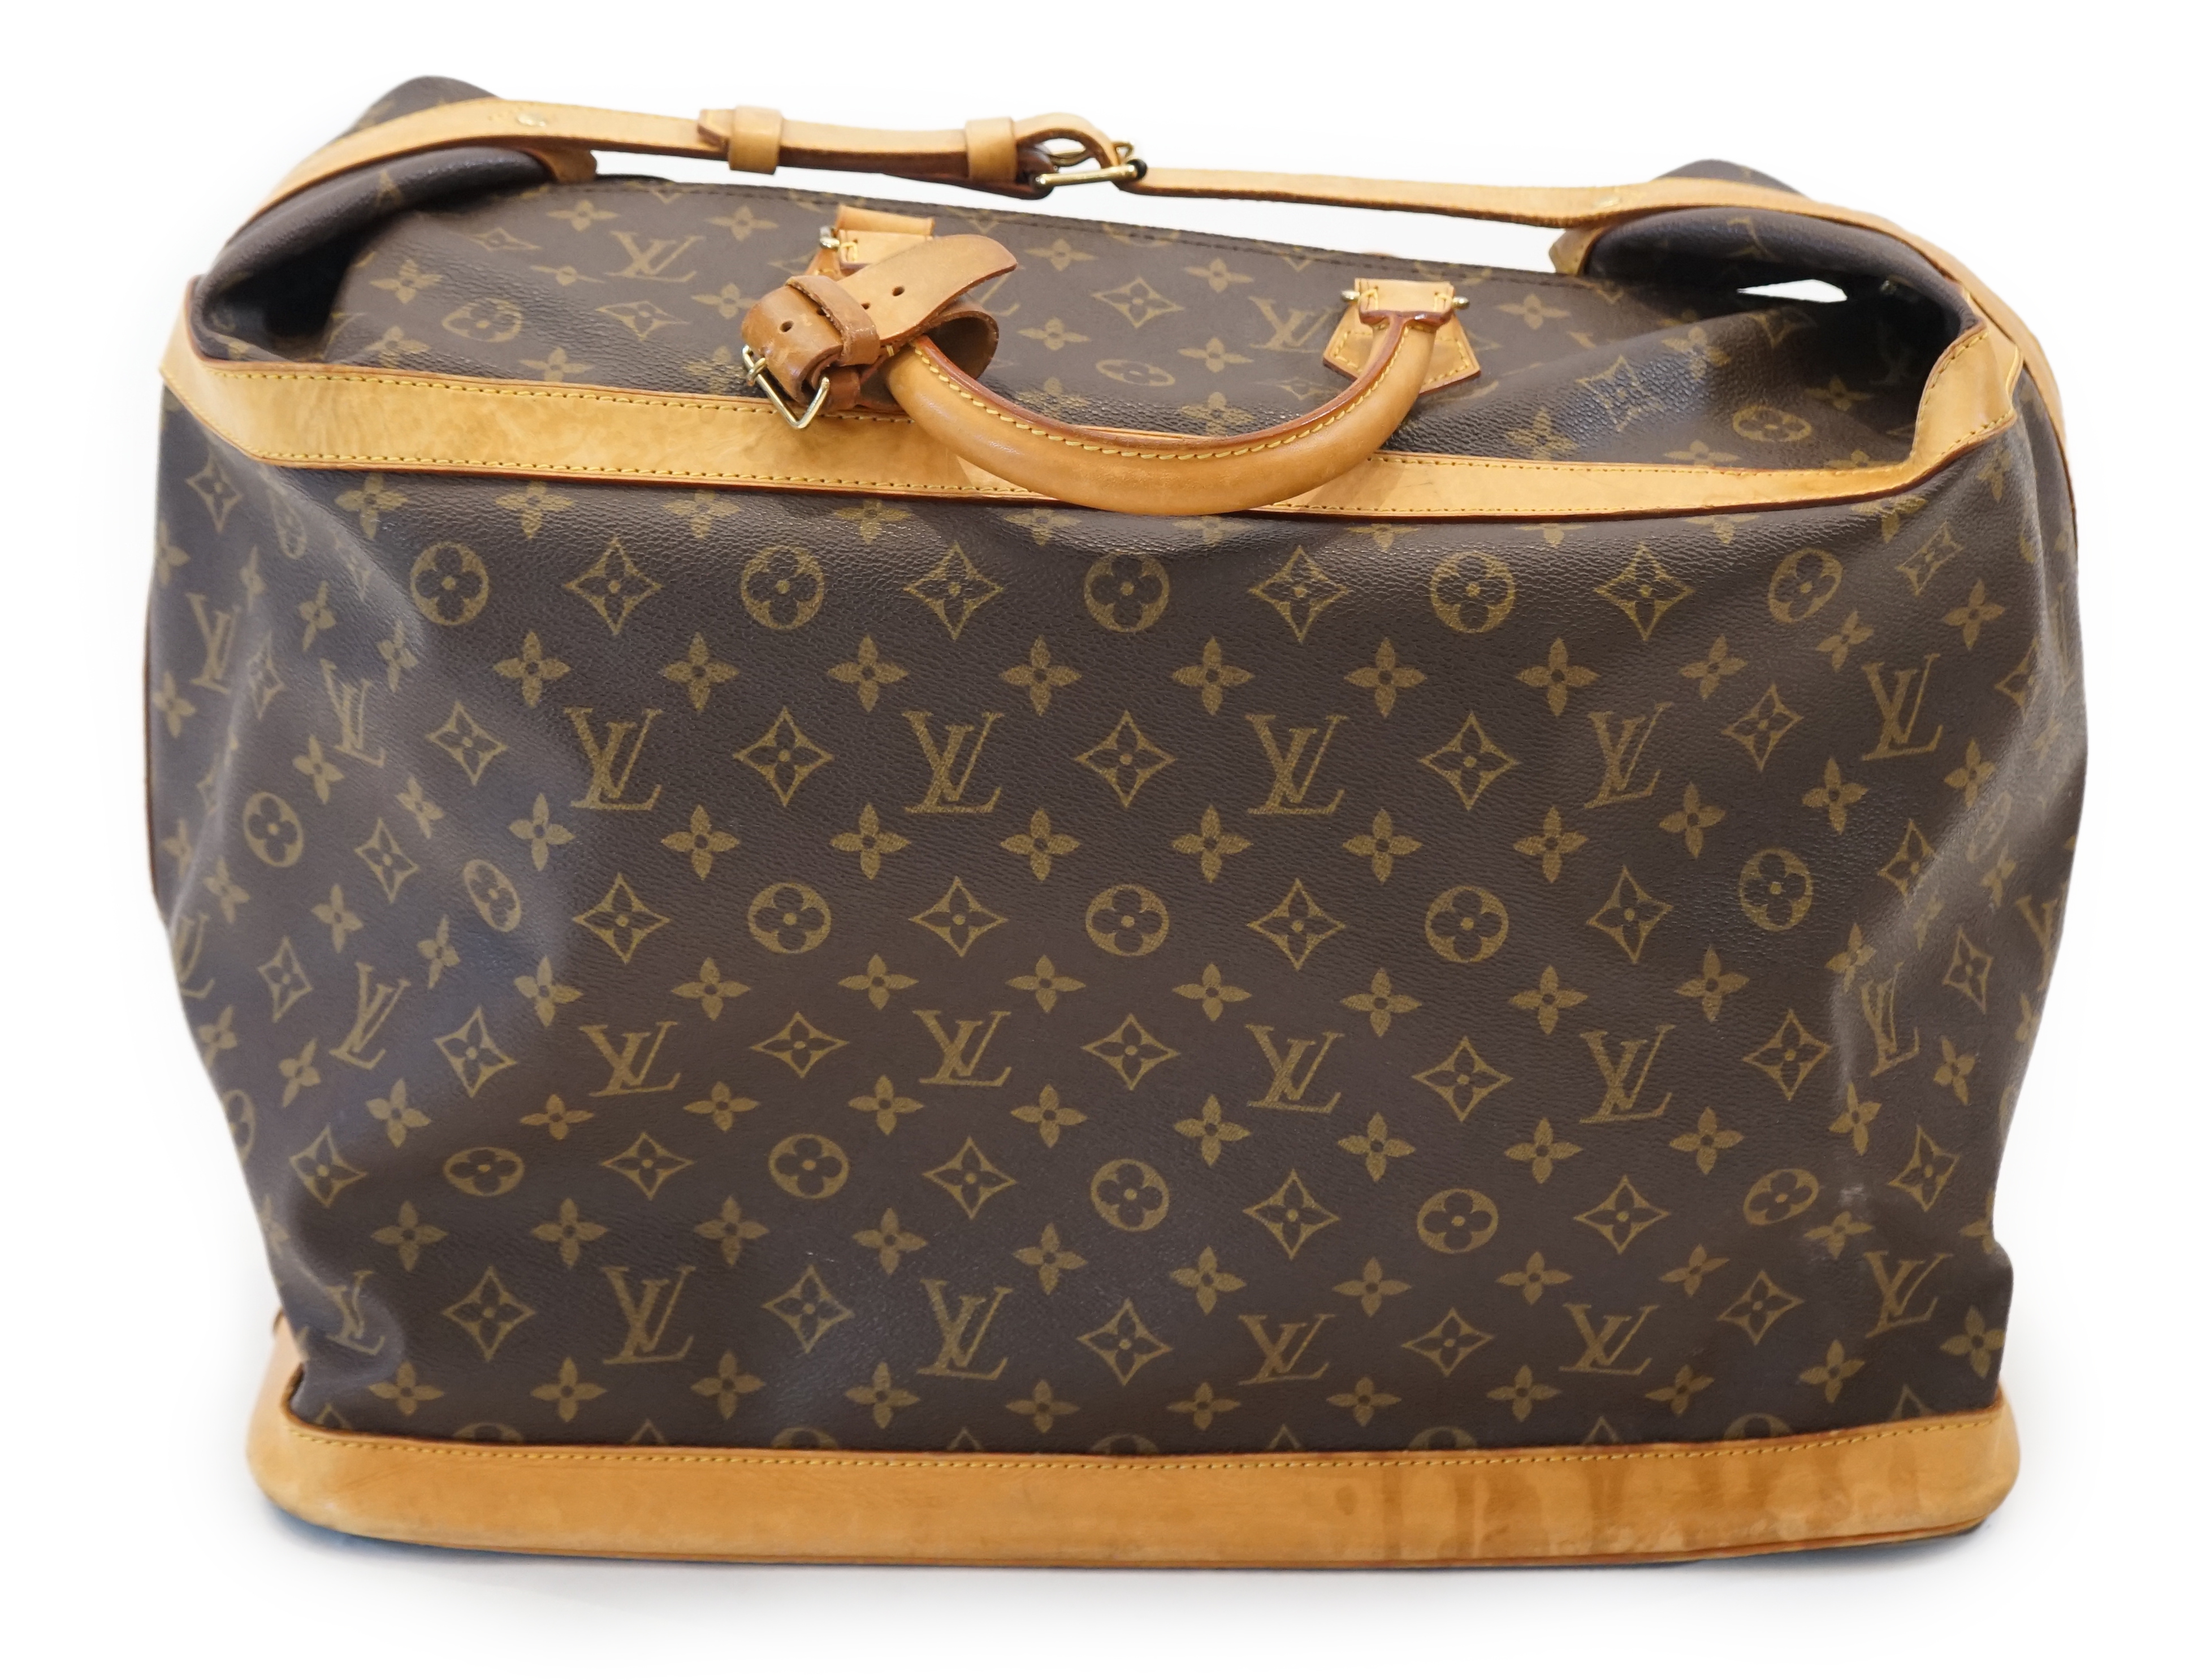 A Louis Vuitton Cruiser 45 travel bag width 25cm, length 45cm, height 30cm